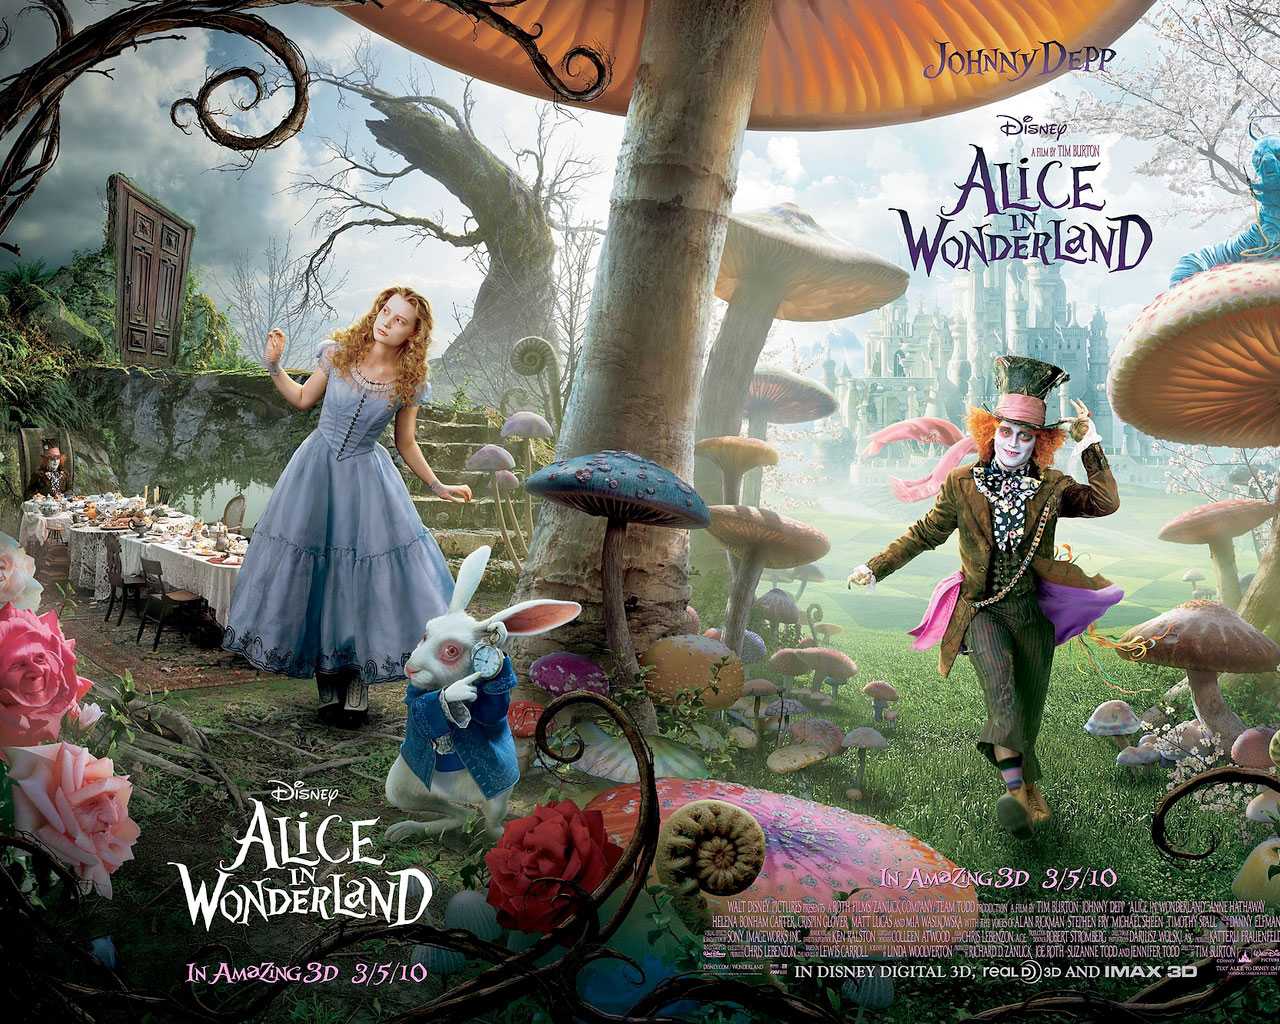 La Disney si prepara al sequel di "Alice in Wonderland"